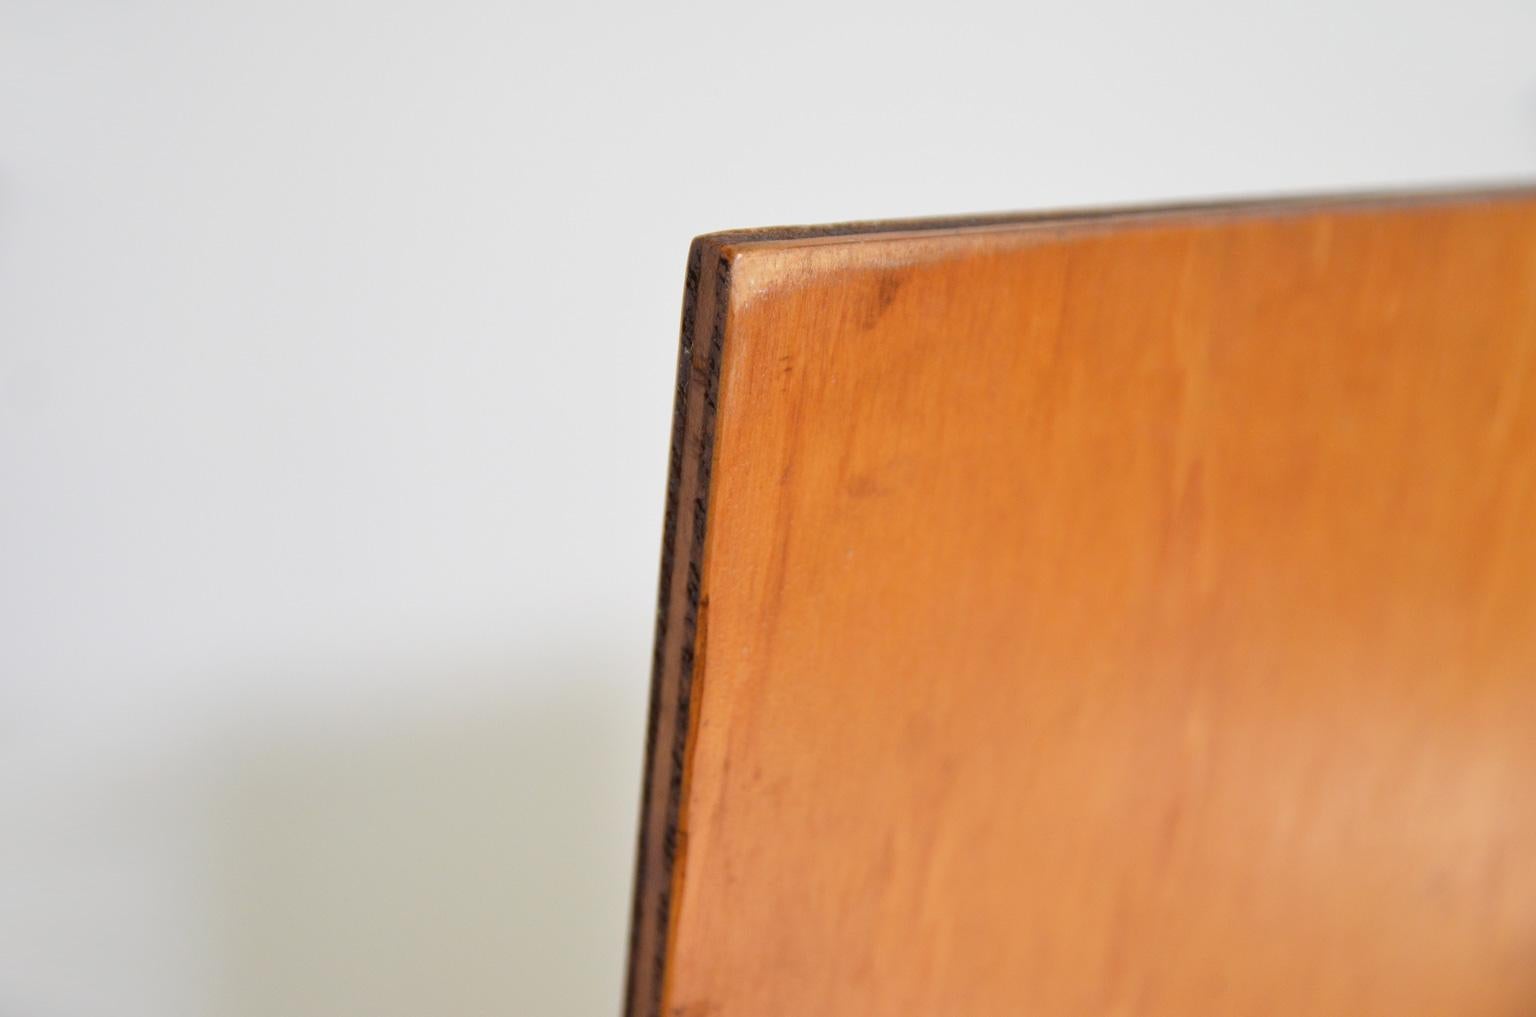 Lacquered Wooden Bench in the Manner of Dutch De Stijl designer Gerrit Rietveld